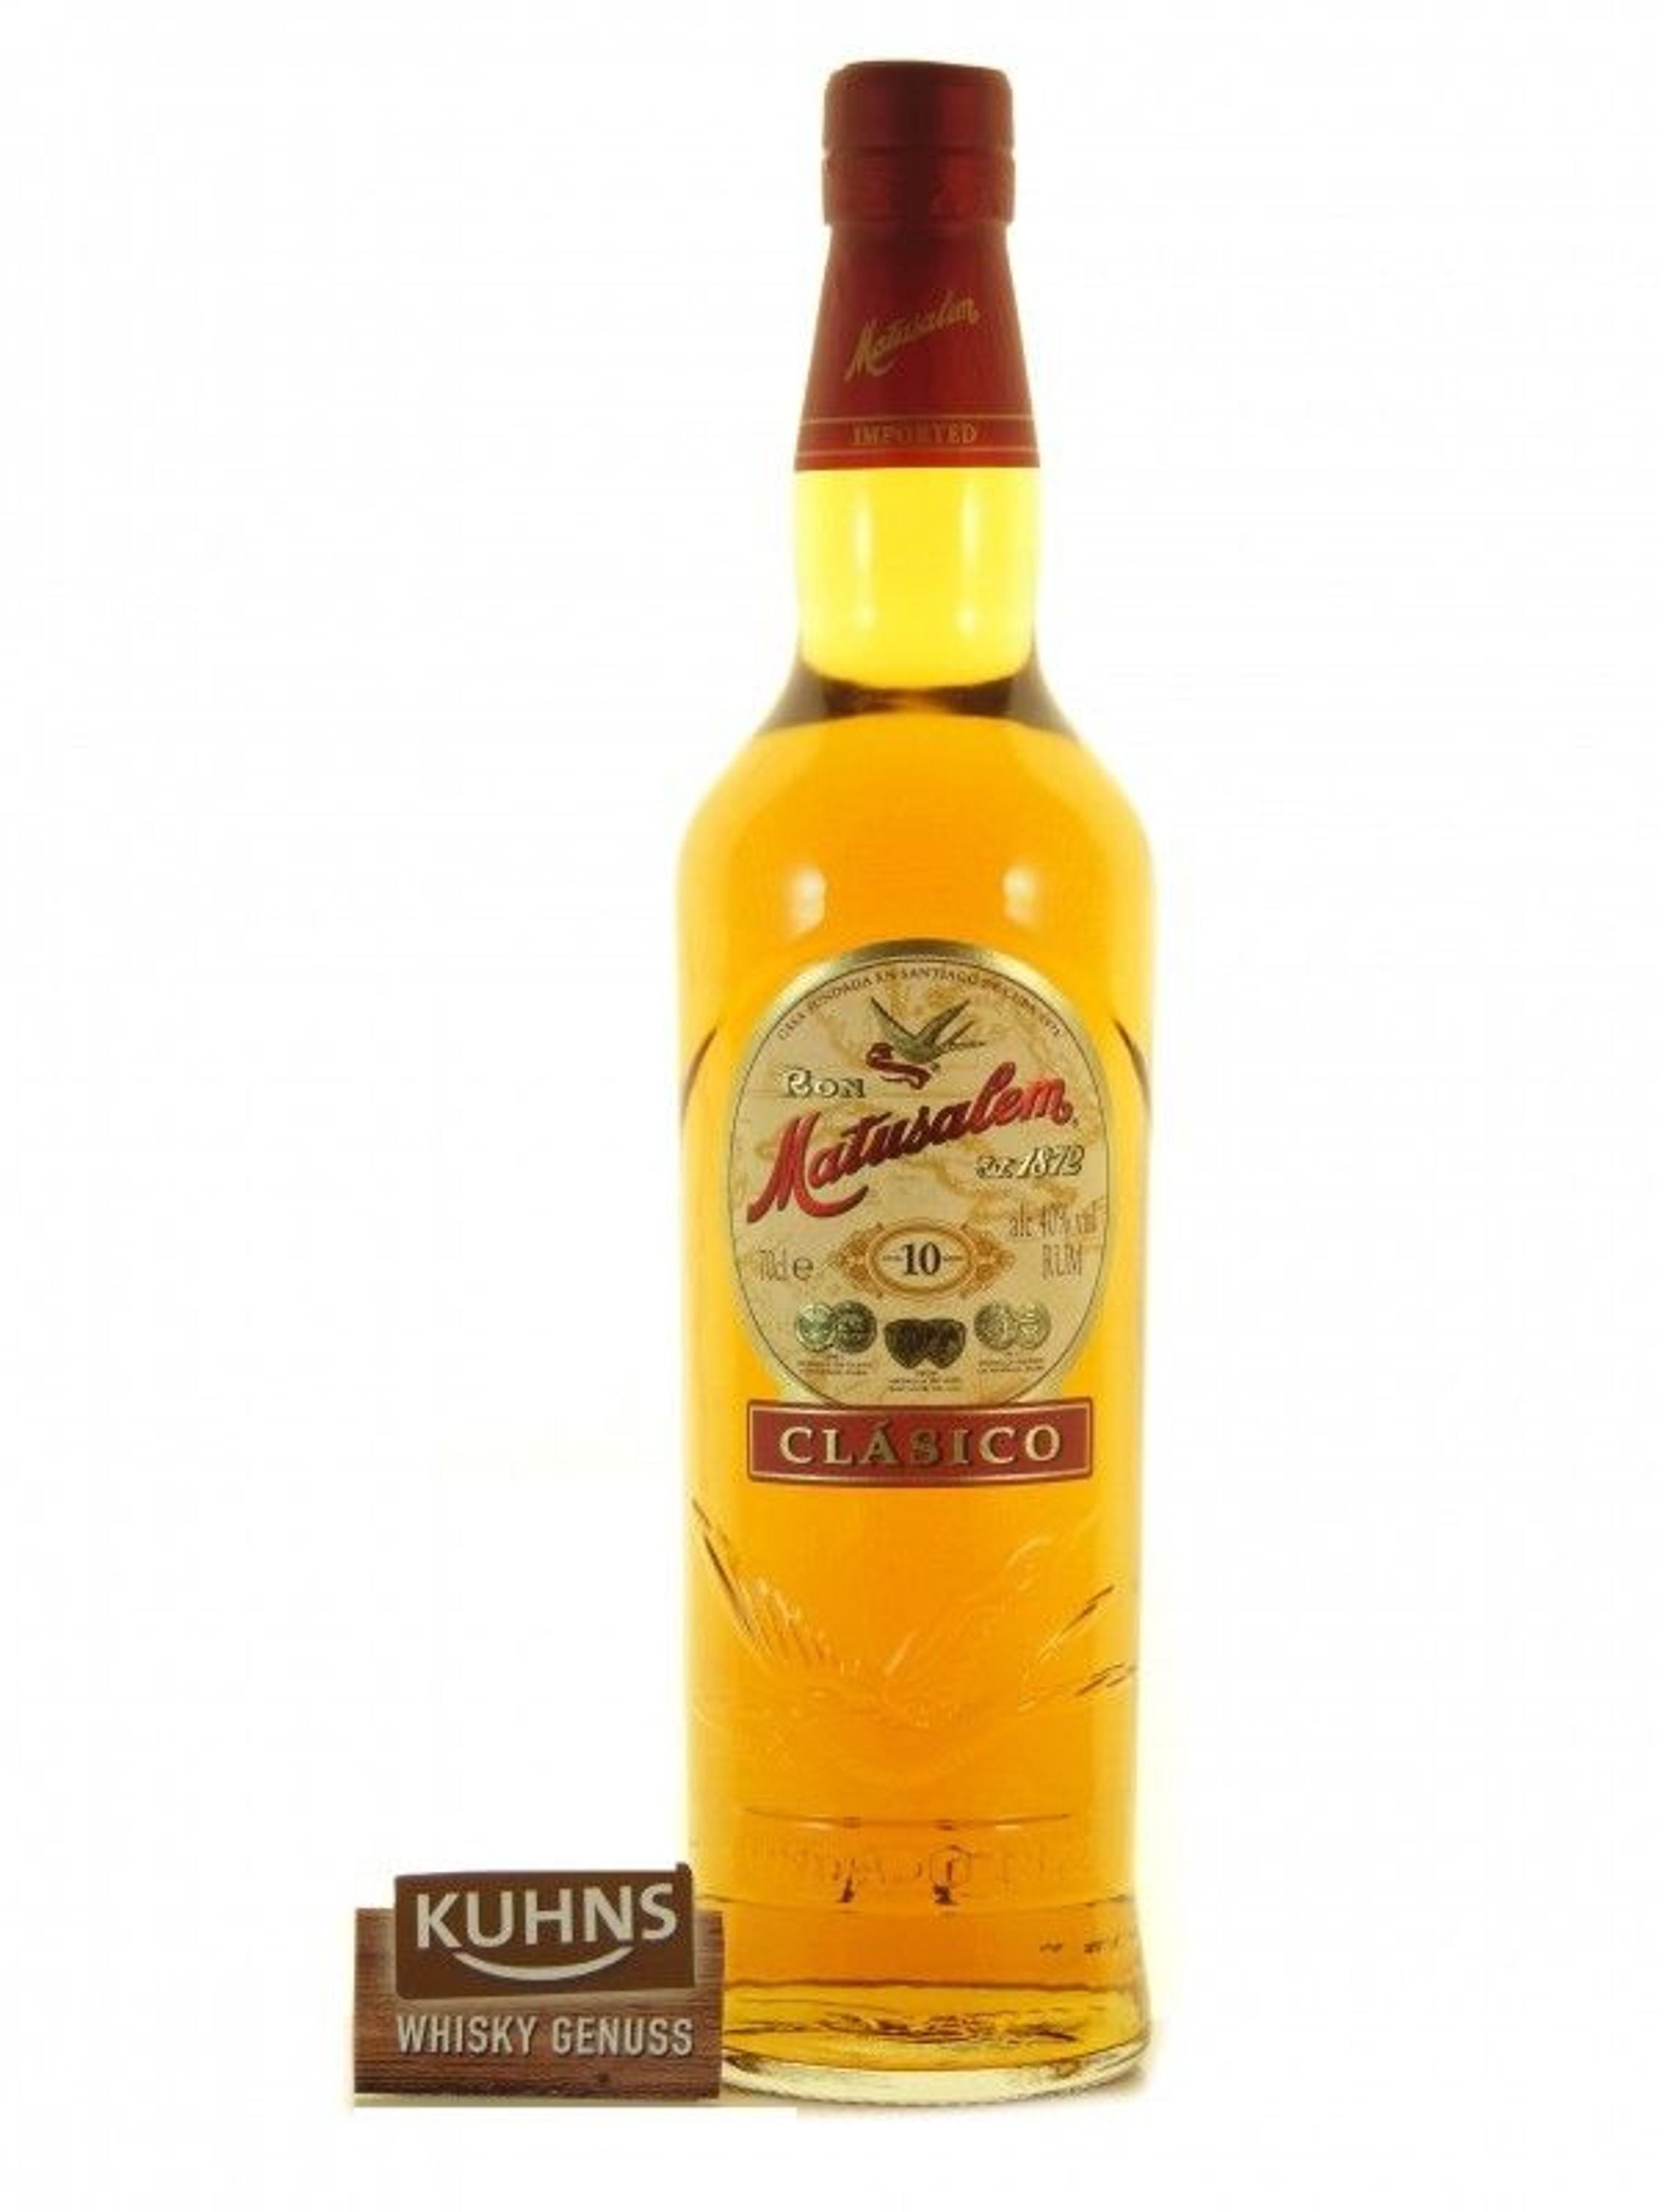 Matusalem Clasico 10 Years Rum Dominican Republic 0.7l, alc. 40% by volume